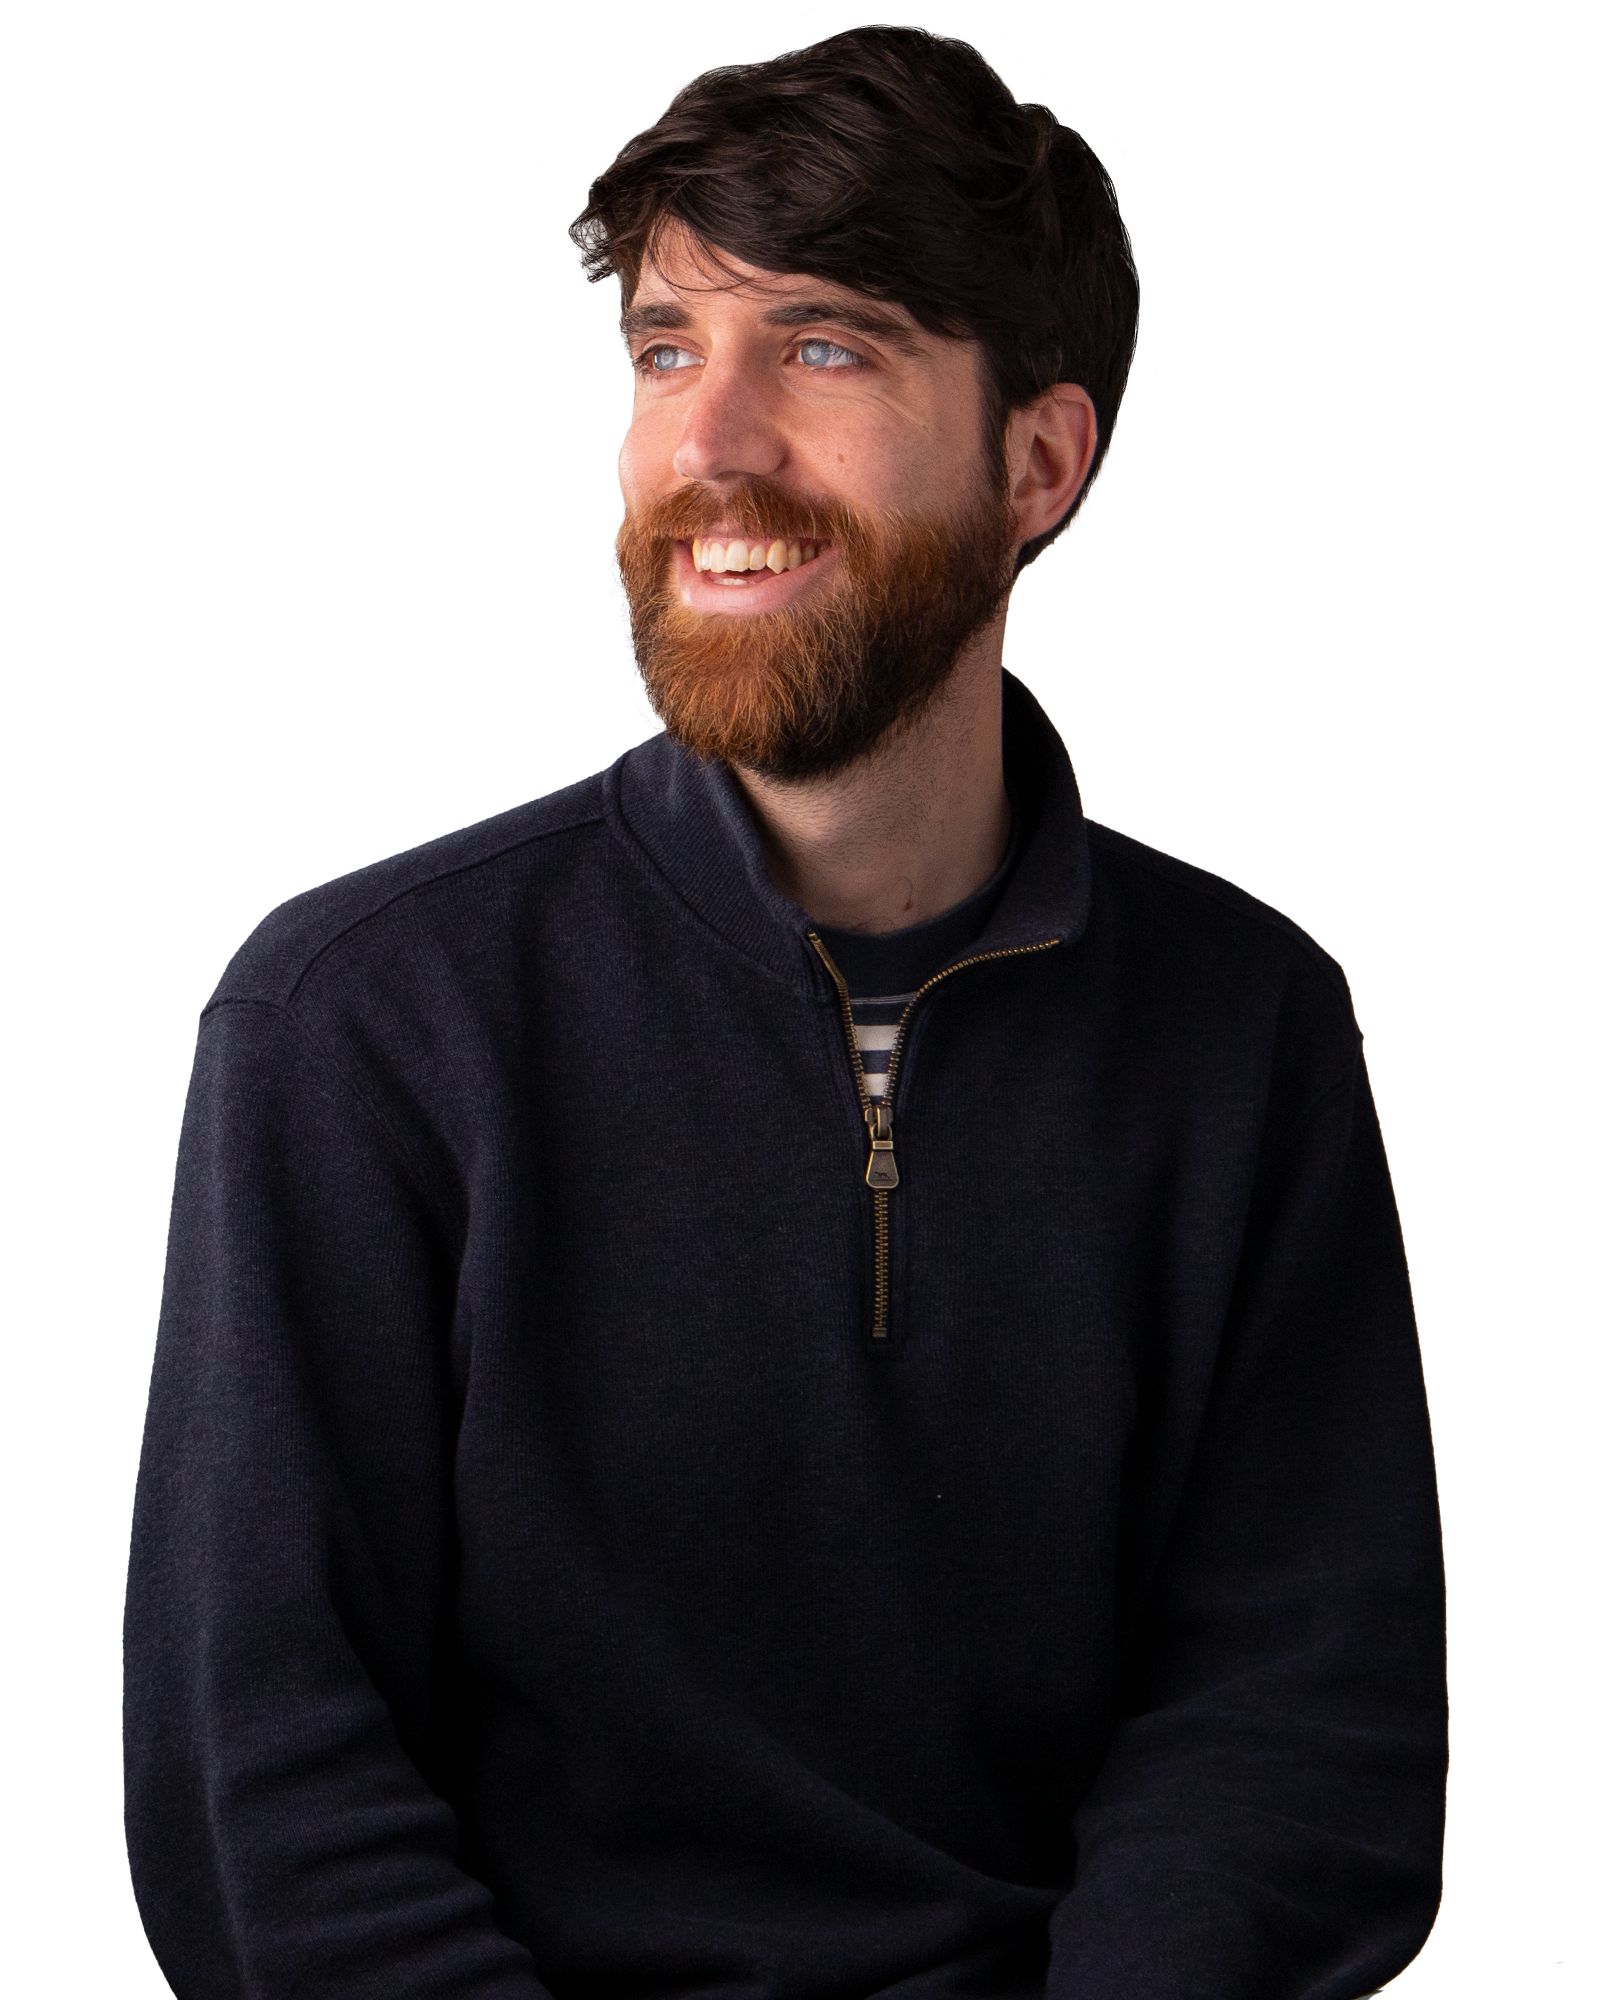 Man with dark hair and beard, smiling.